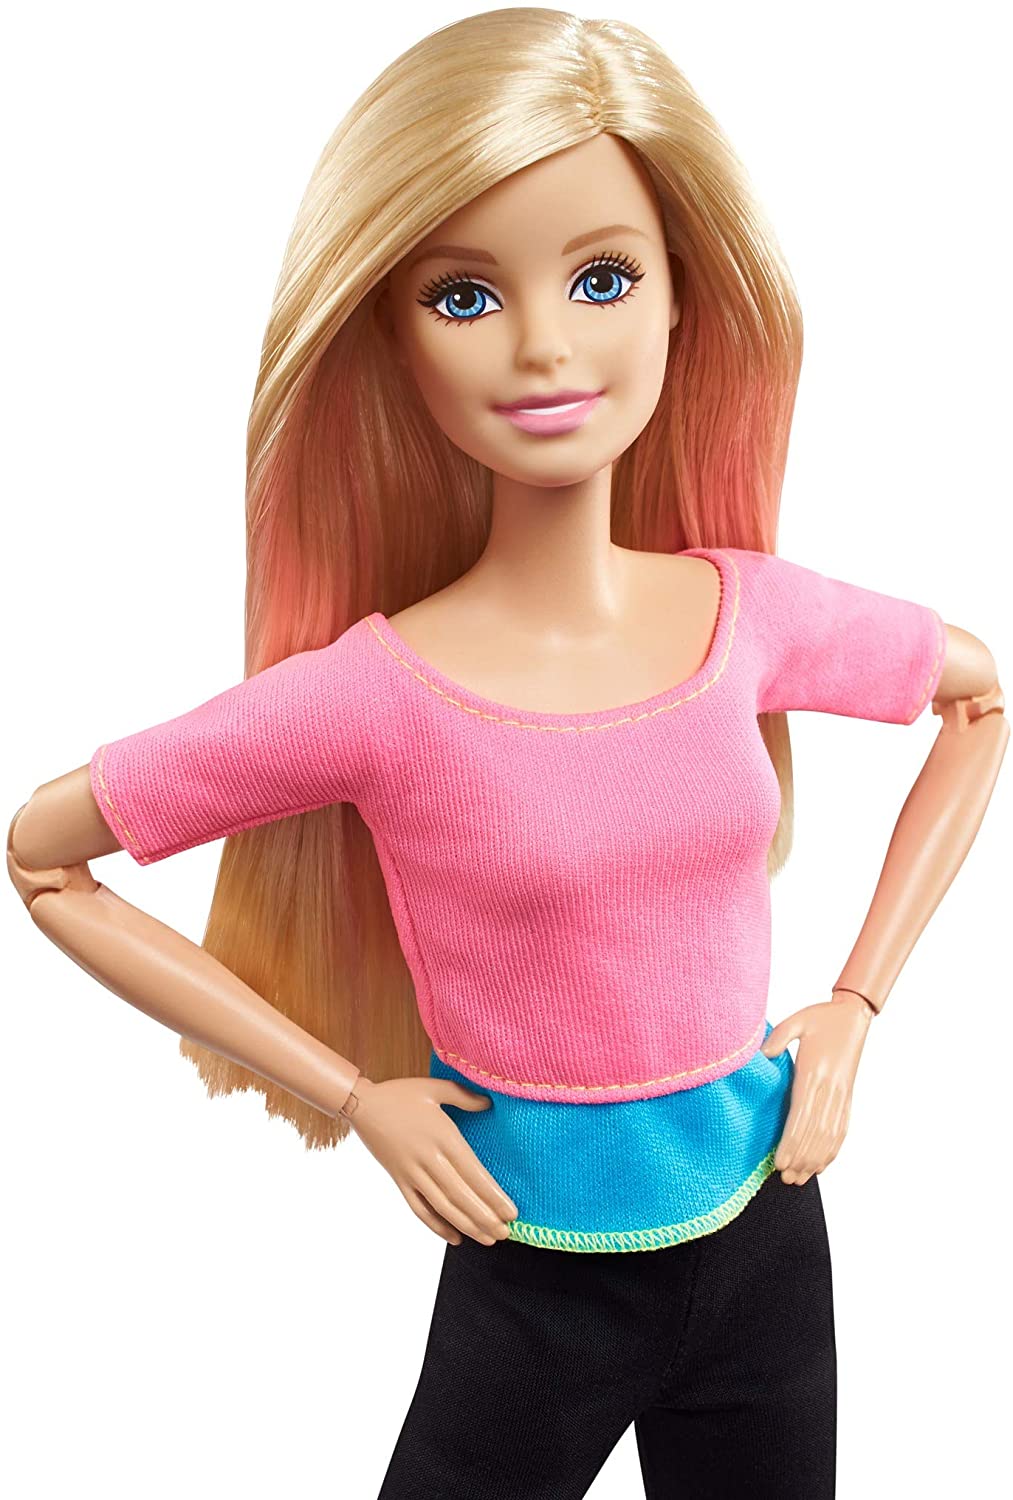 Barbie Yoga Doll  IVI 3D Play Carpets